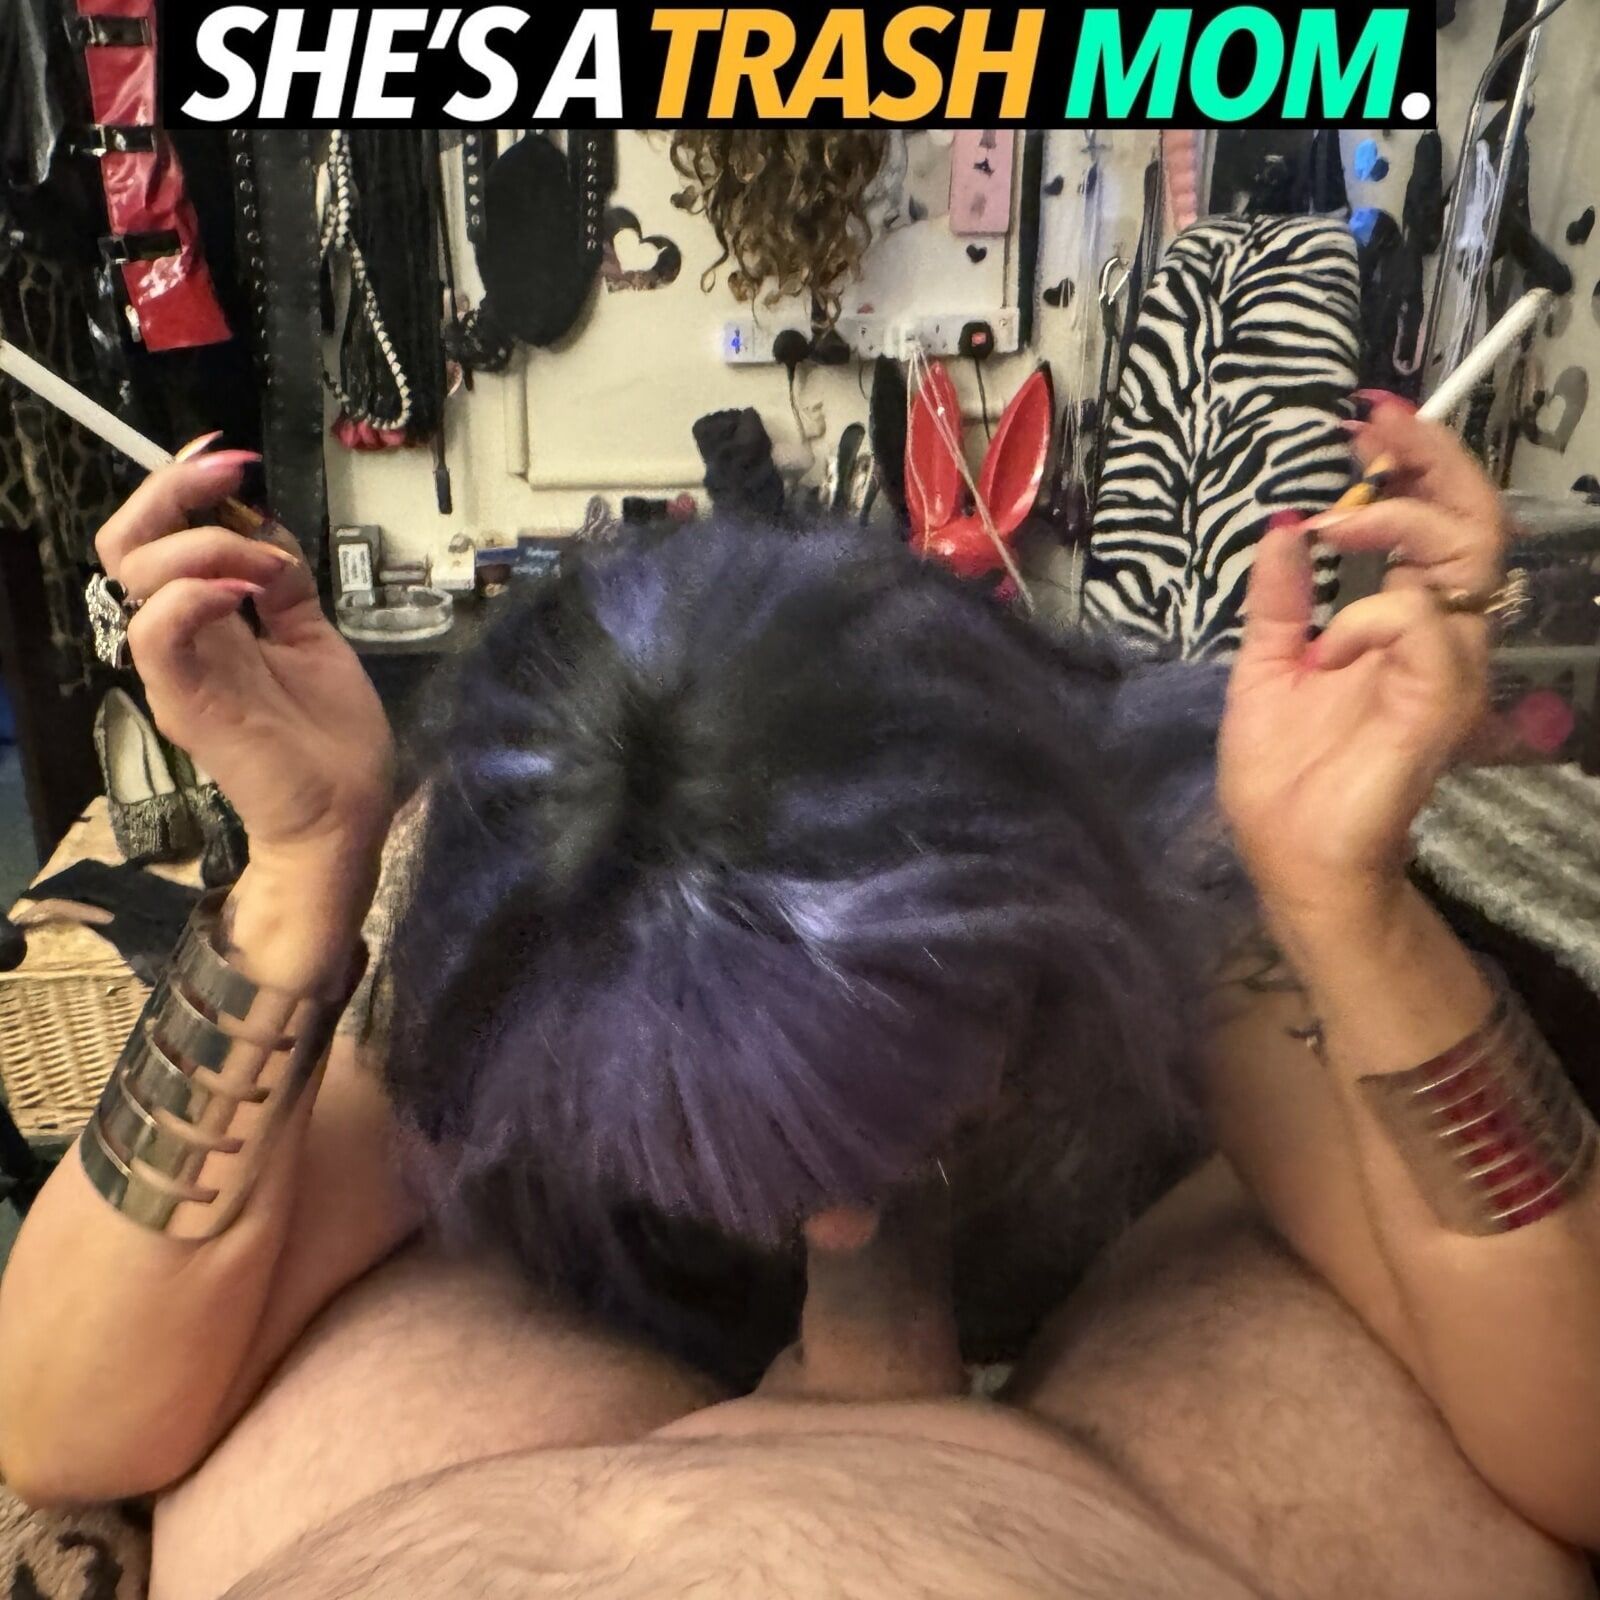 SHIRLEY TRASH MOM #31